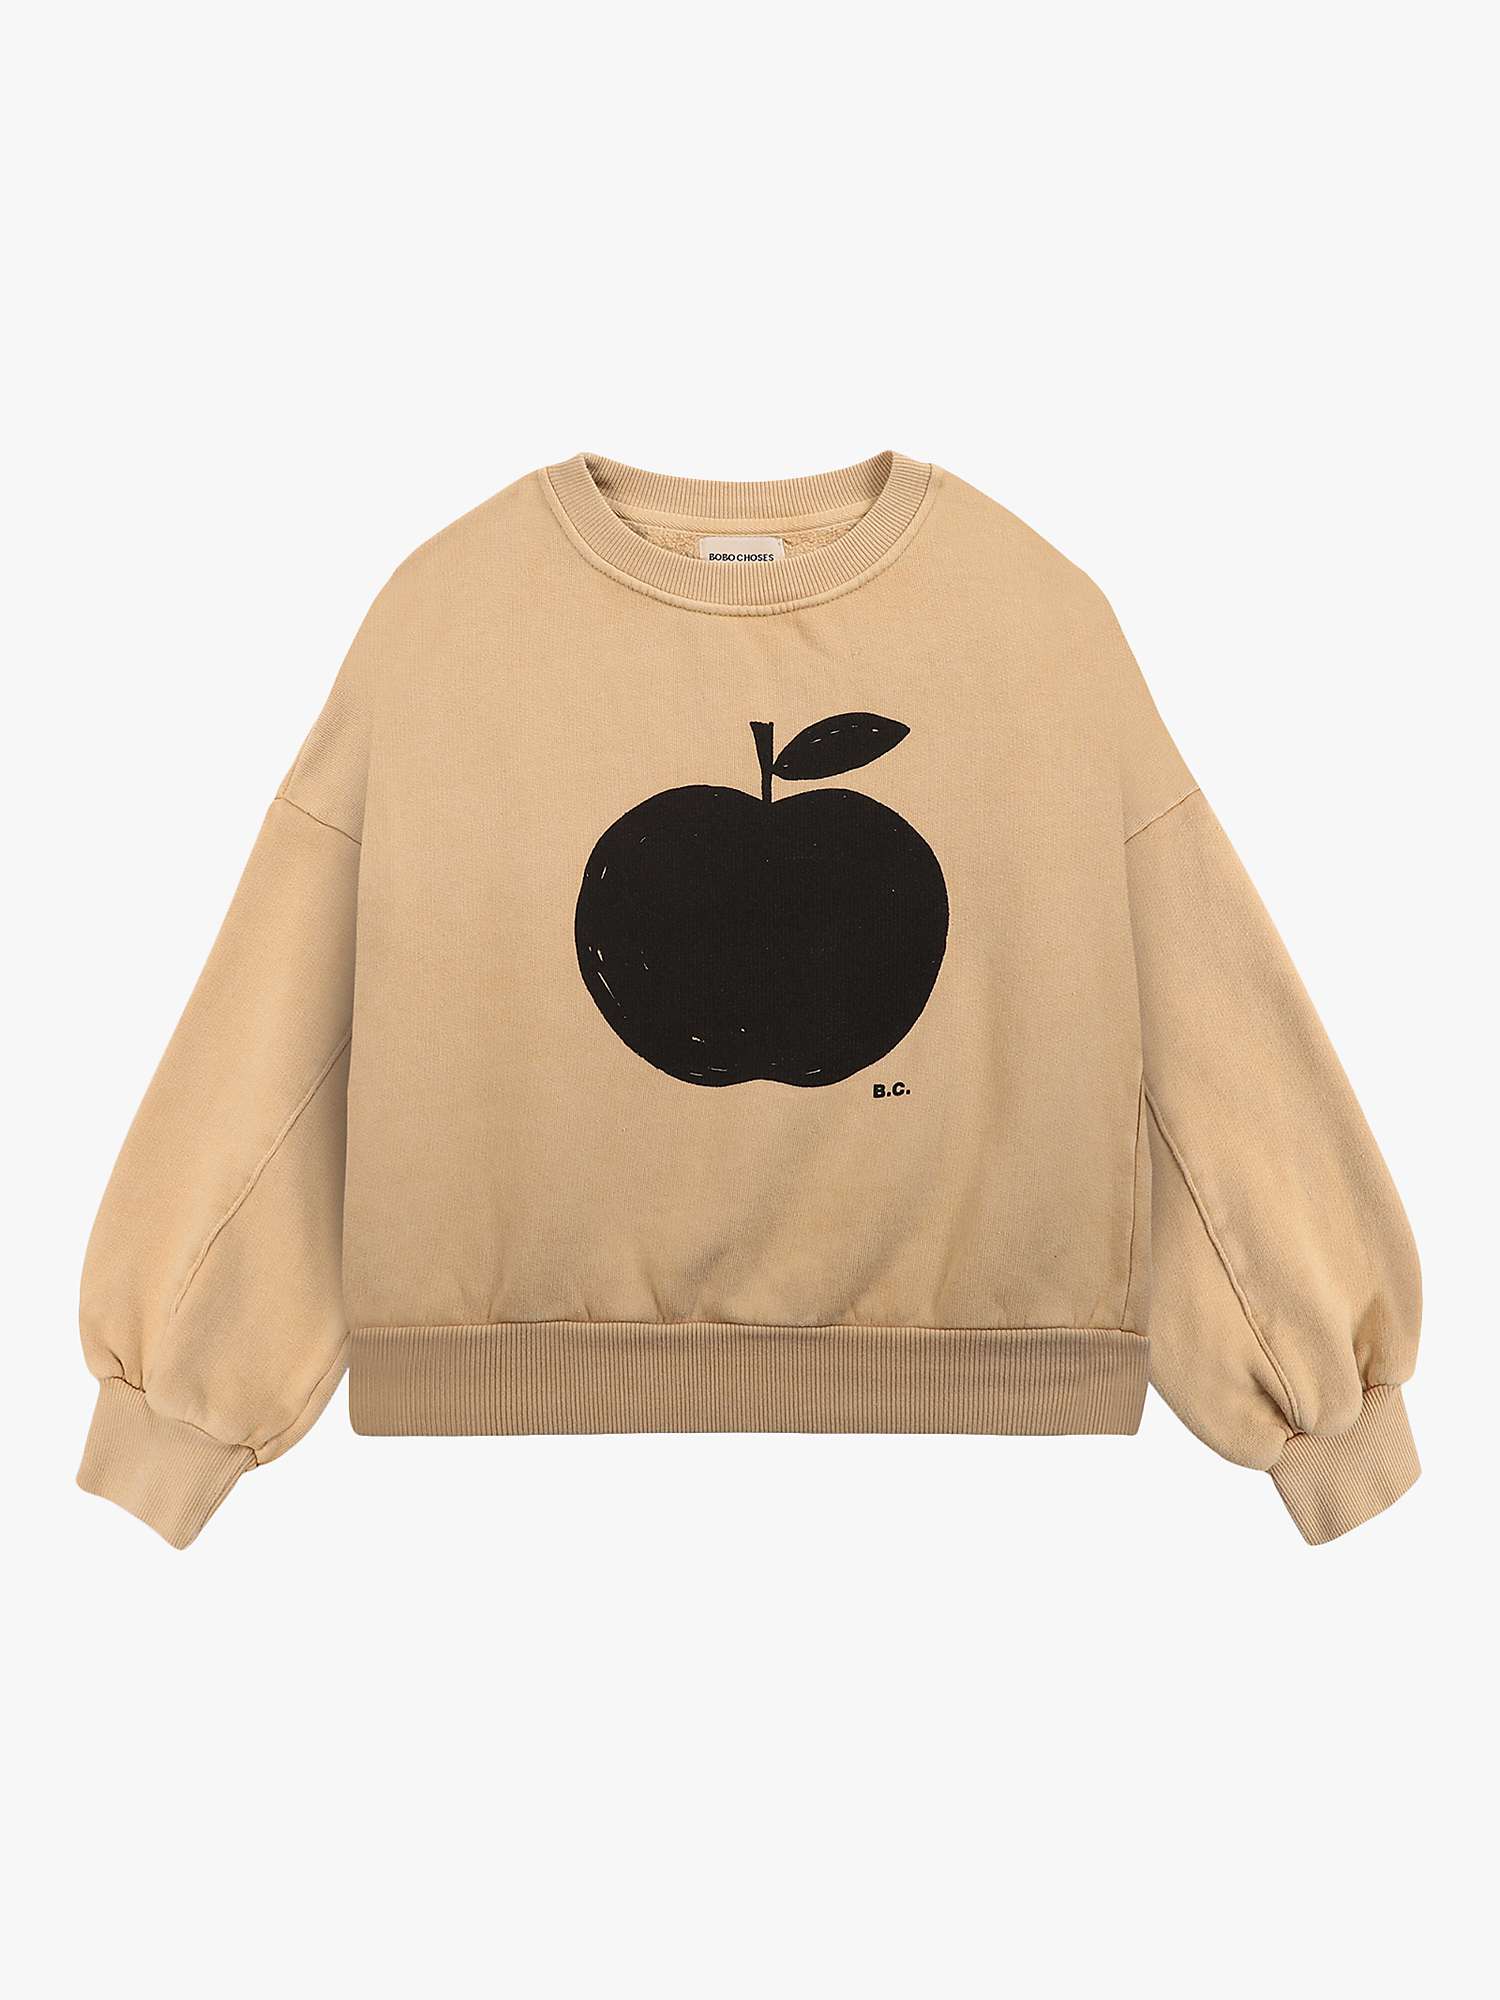 Buy Bobo Choses Kids' Organic Cotton Blend Poma Apple Sweatshirt Online at johnlewis.com